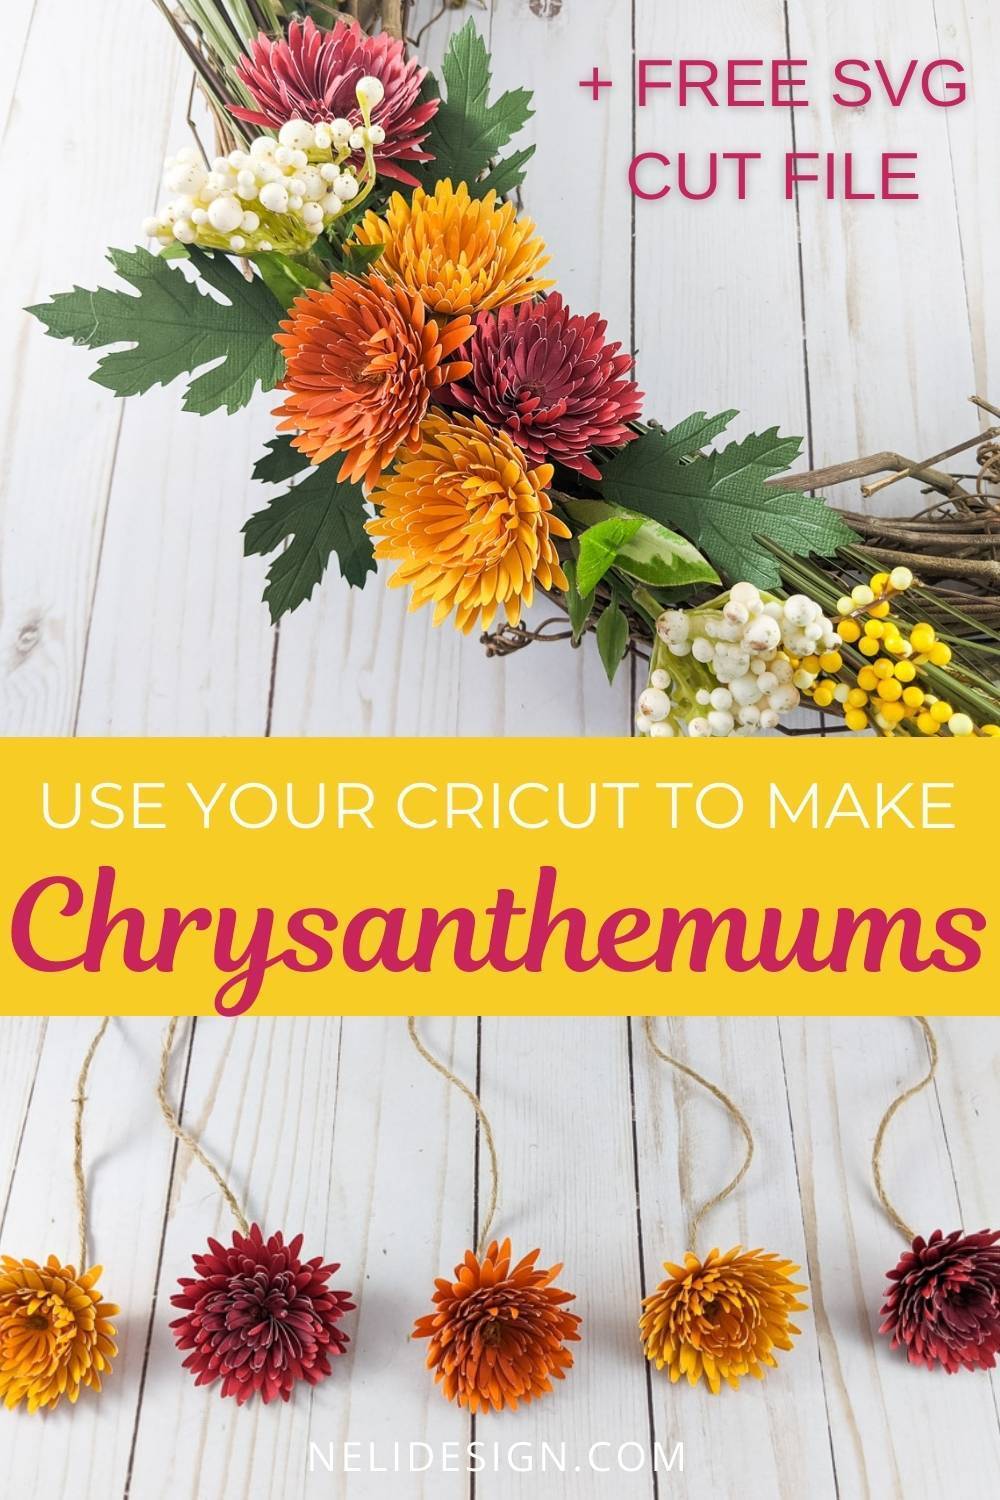 Pinterest image written Use your Cricut to make Chrysanthemums + free SVG cut file